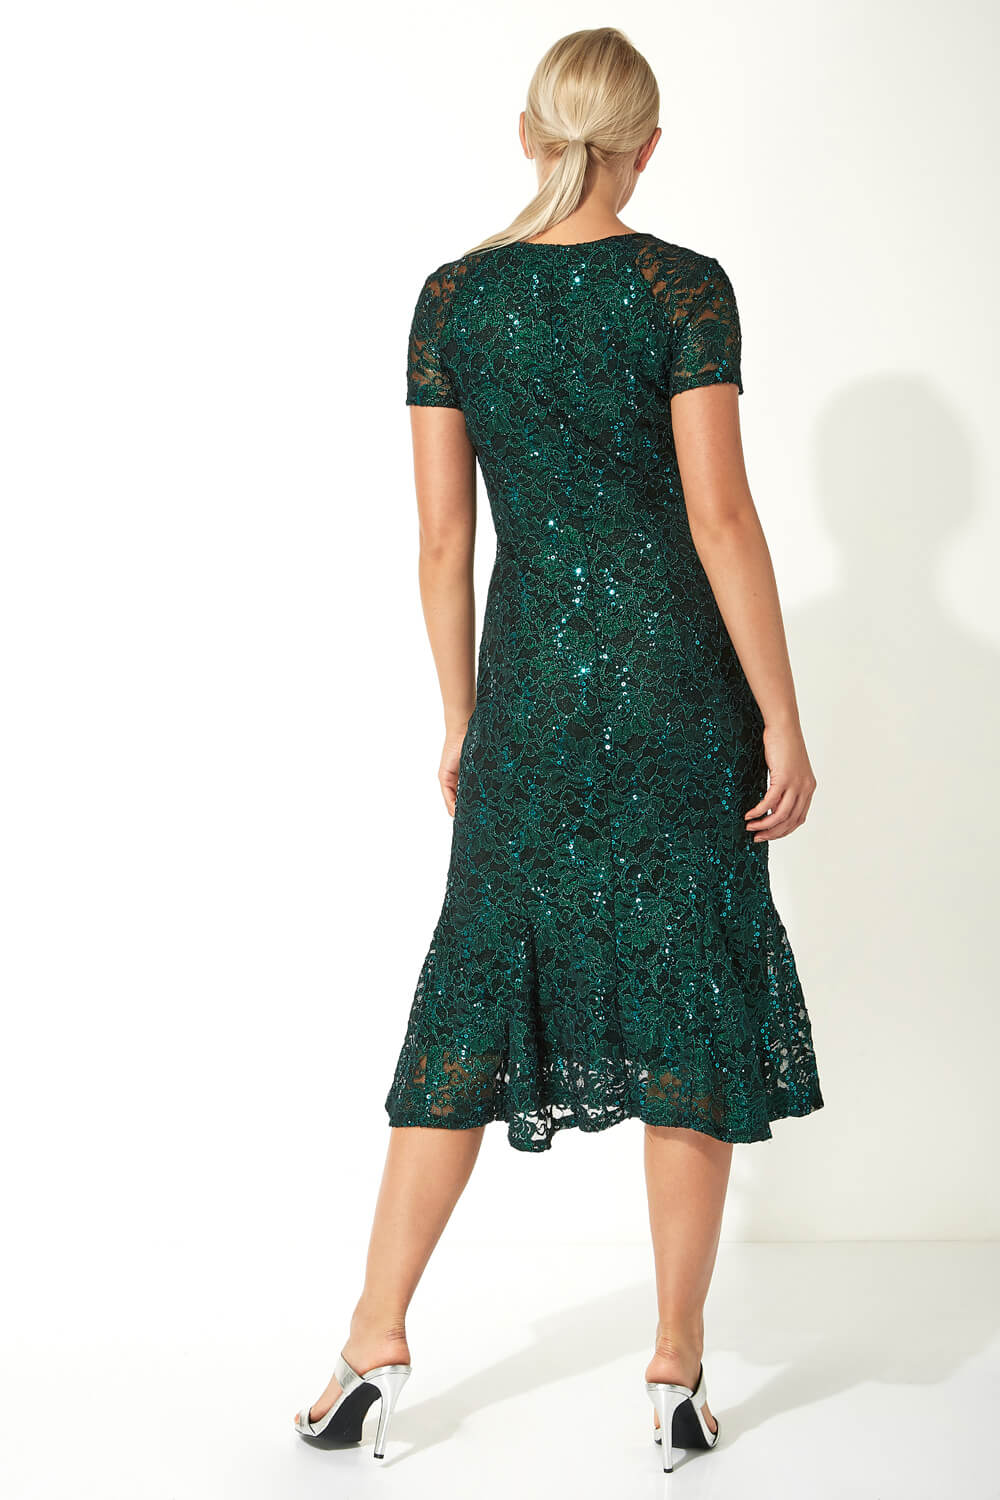 Green Metallic Lace Sequin Midi Dress, Image 3 of 5